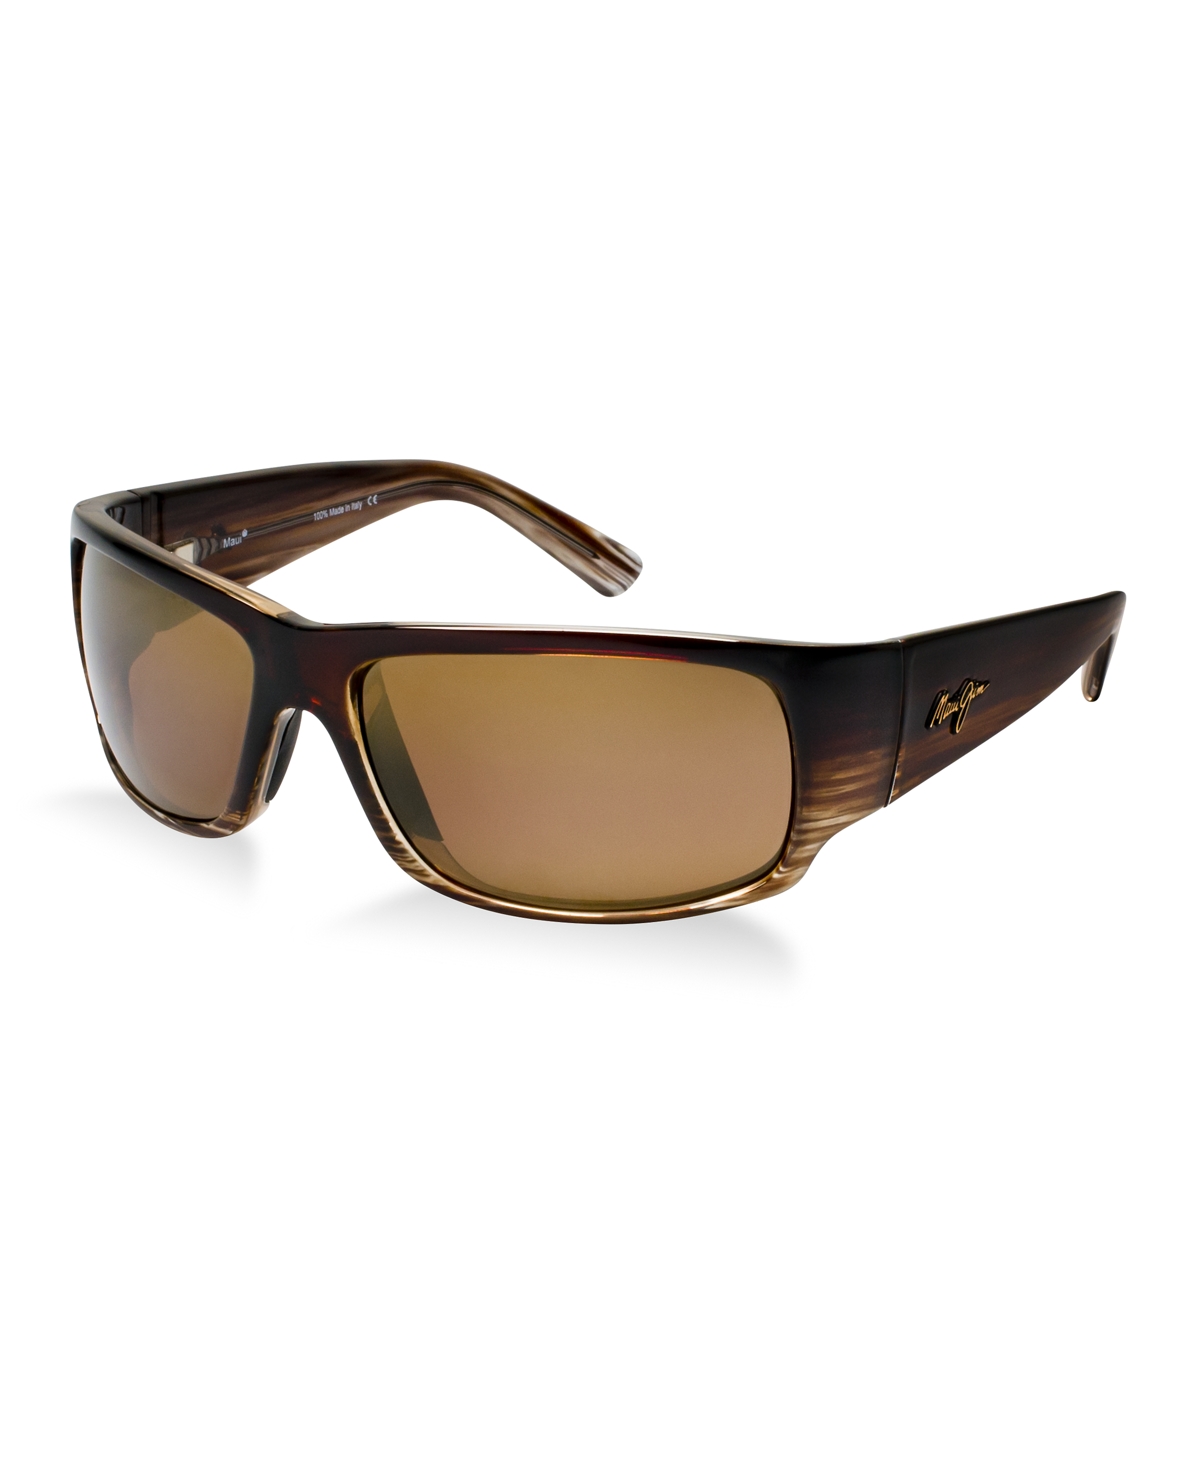 Maui Jim Polarized World Cup Sunglasses, H266-01 In Brown,bronze